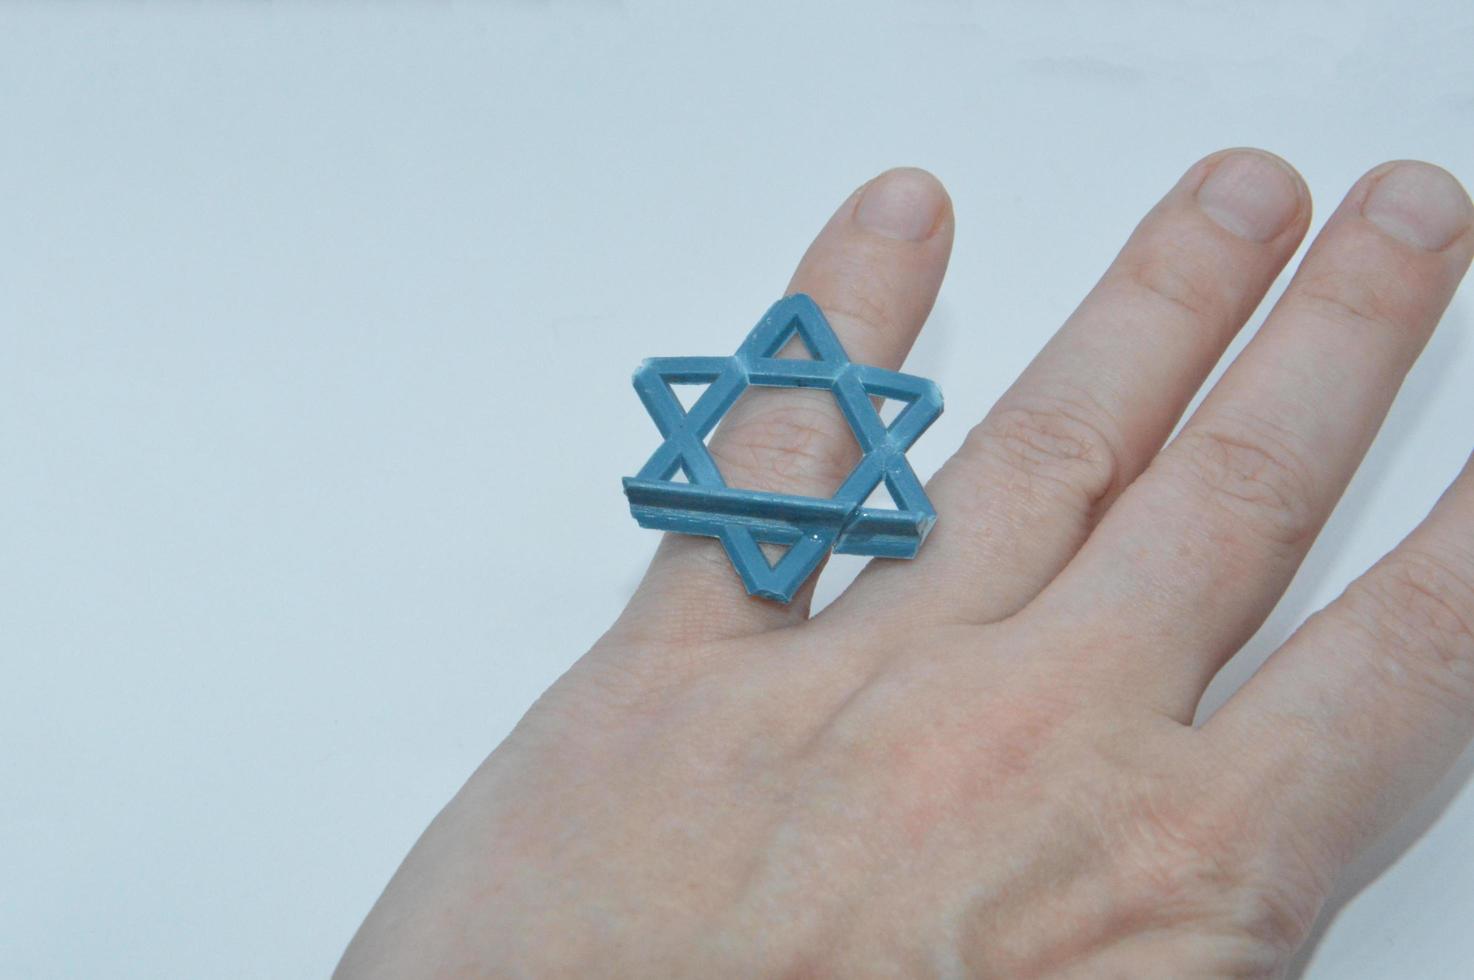 estrela de David símbolo judeu feito de plástico foto